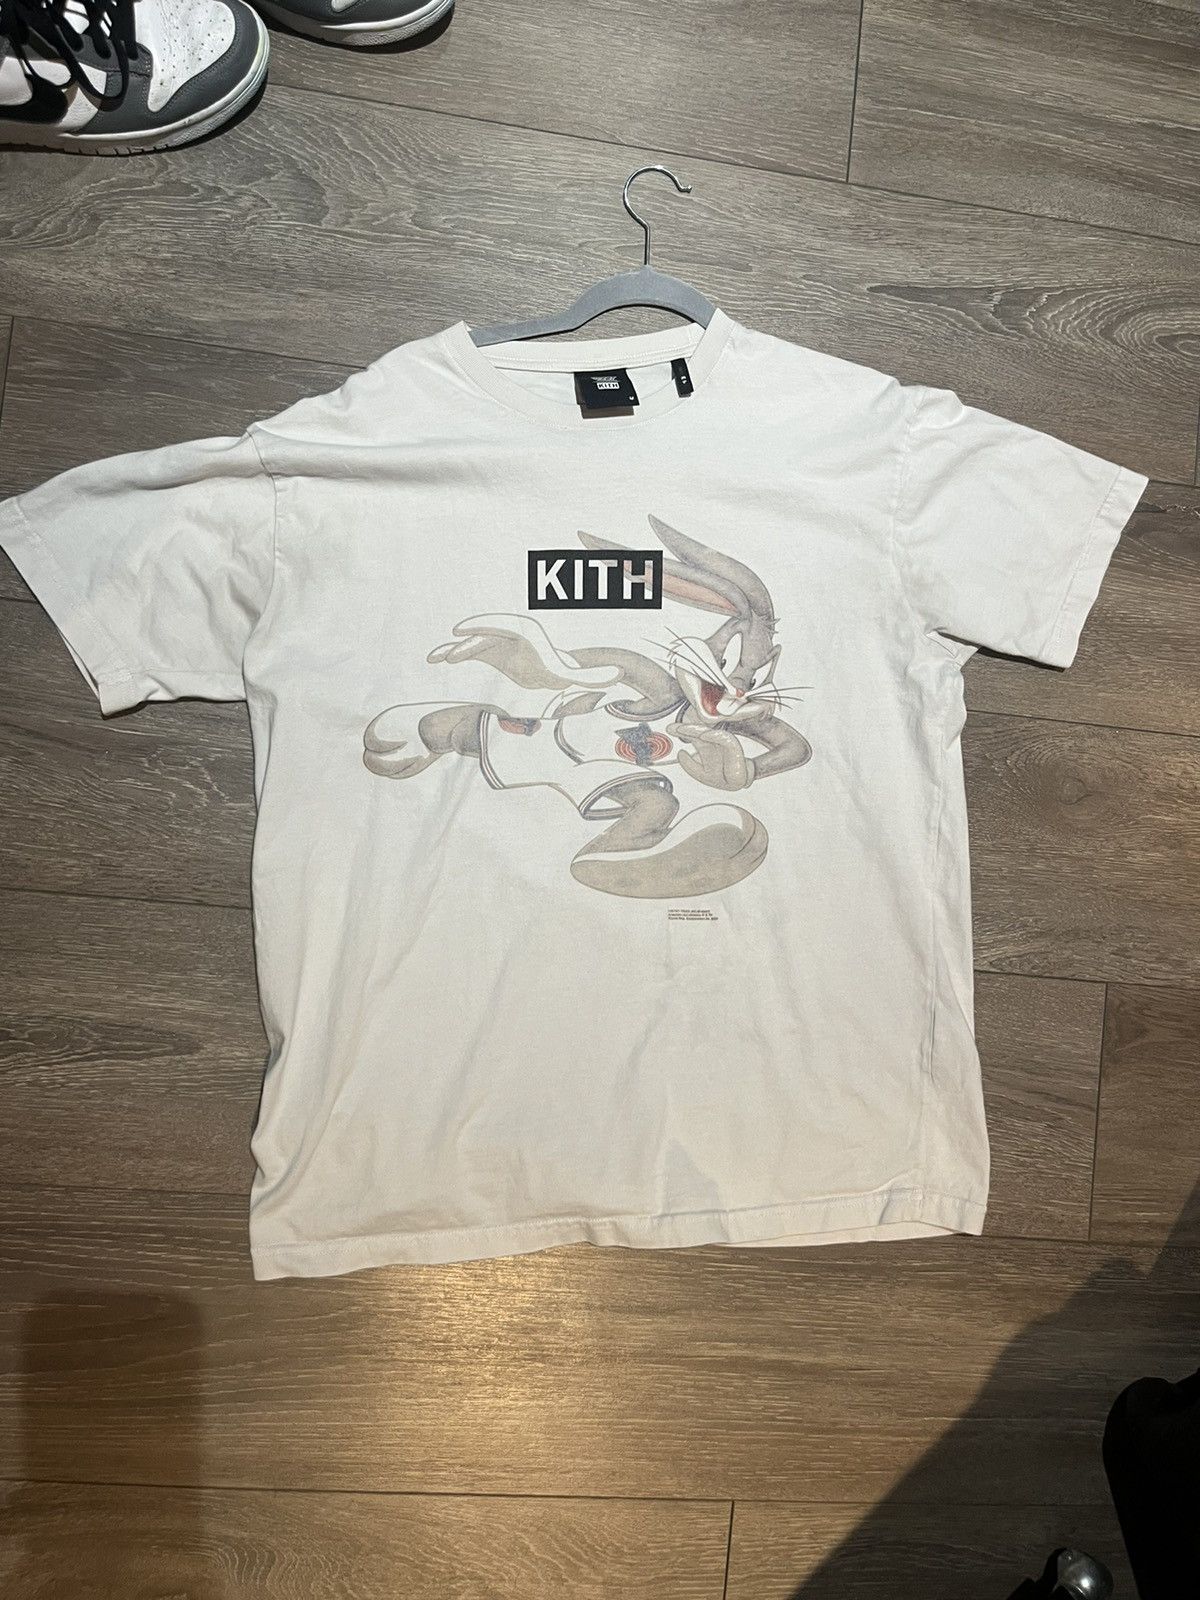 Kith Kith x Looney Tunes tee | Grailed